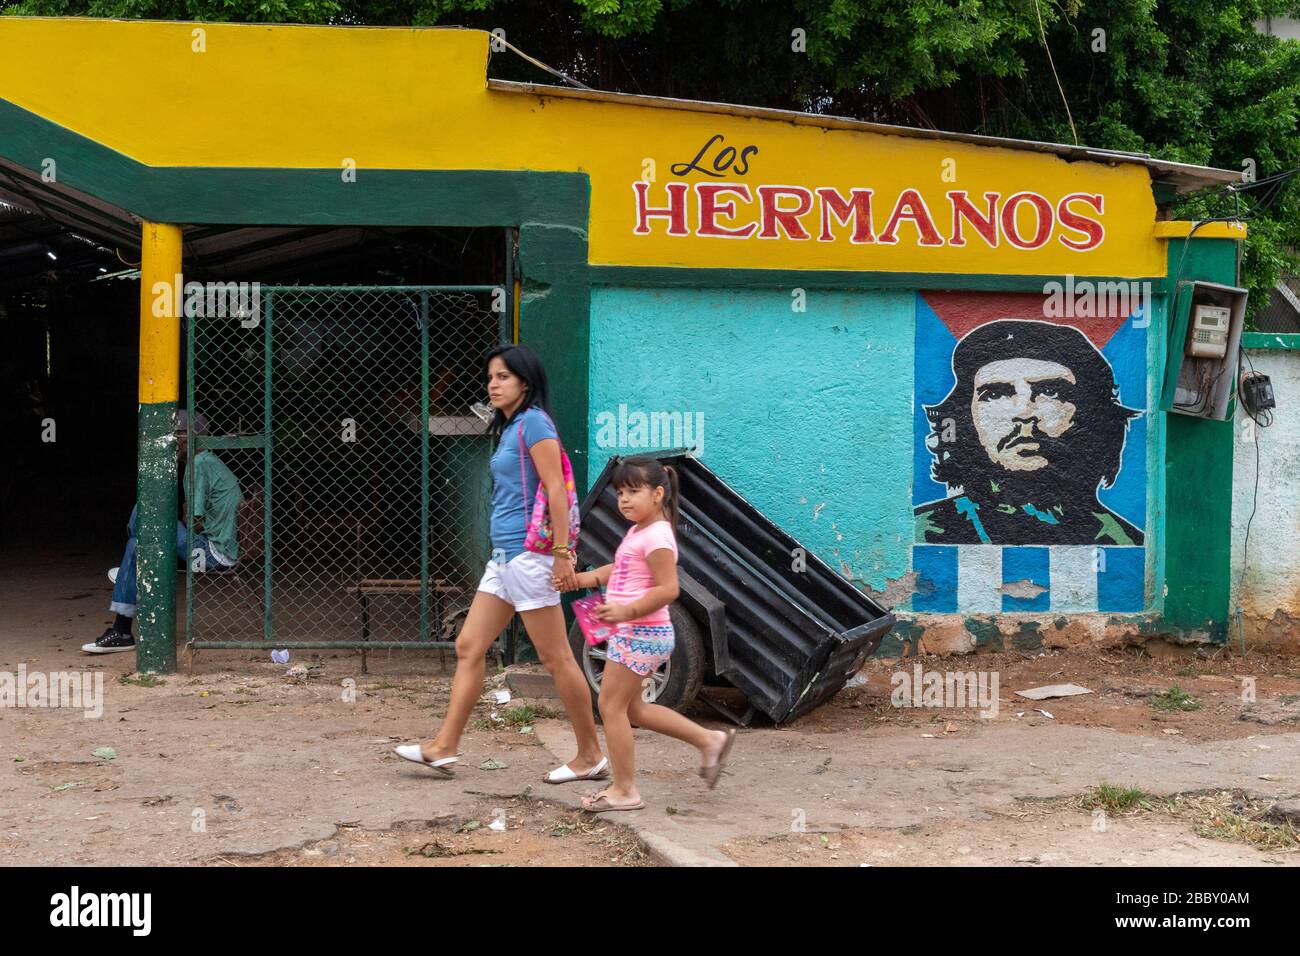 Woman and child walhing near Che Guevara wall painting propaganda Stock Photo